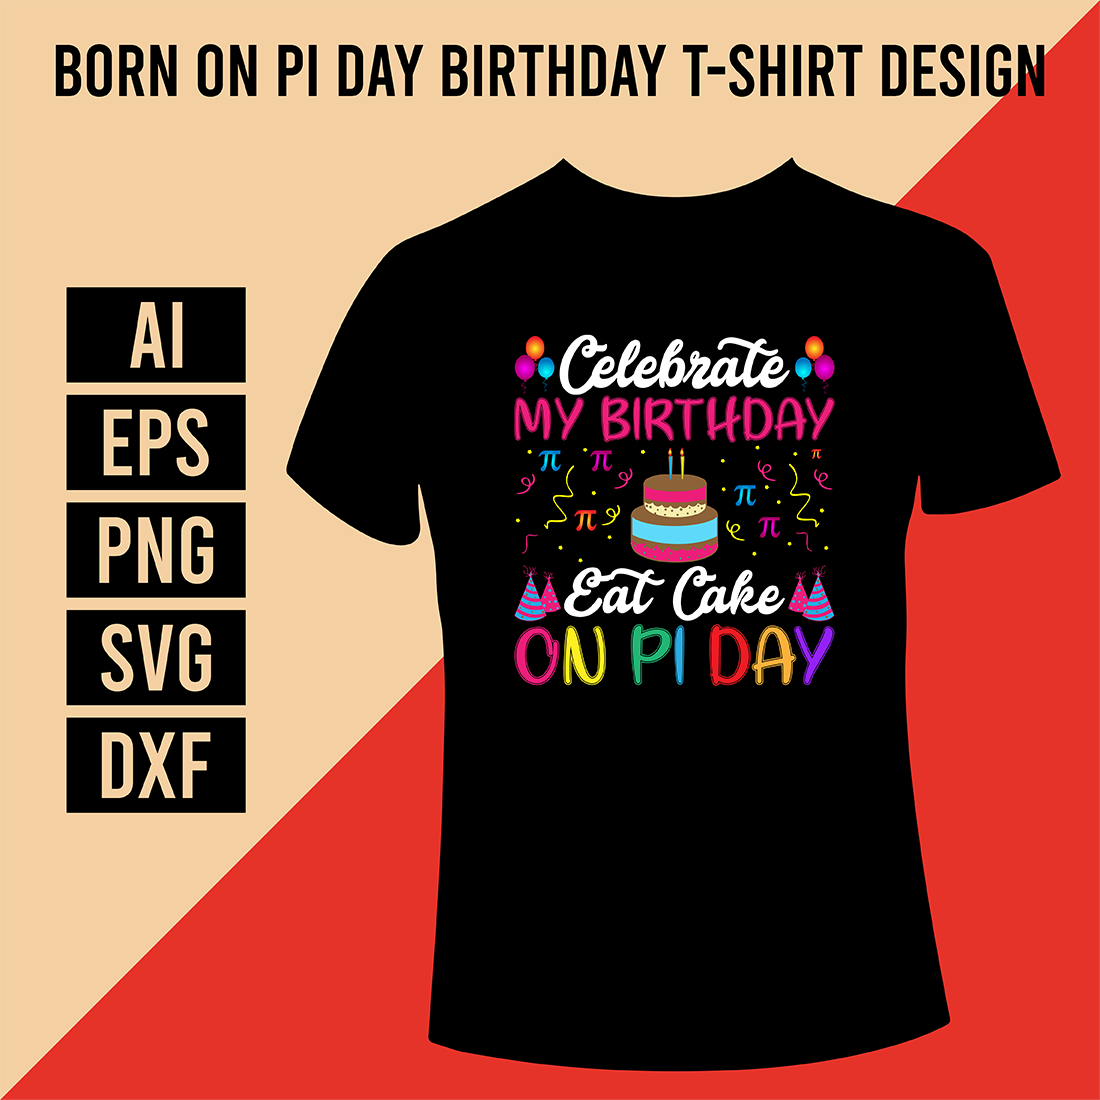 Born on Pi Day Birthday T-Shirt Design cover image.